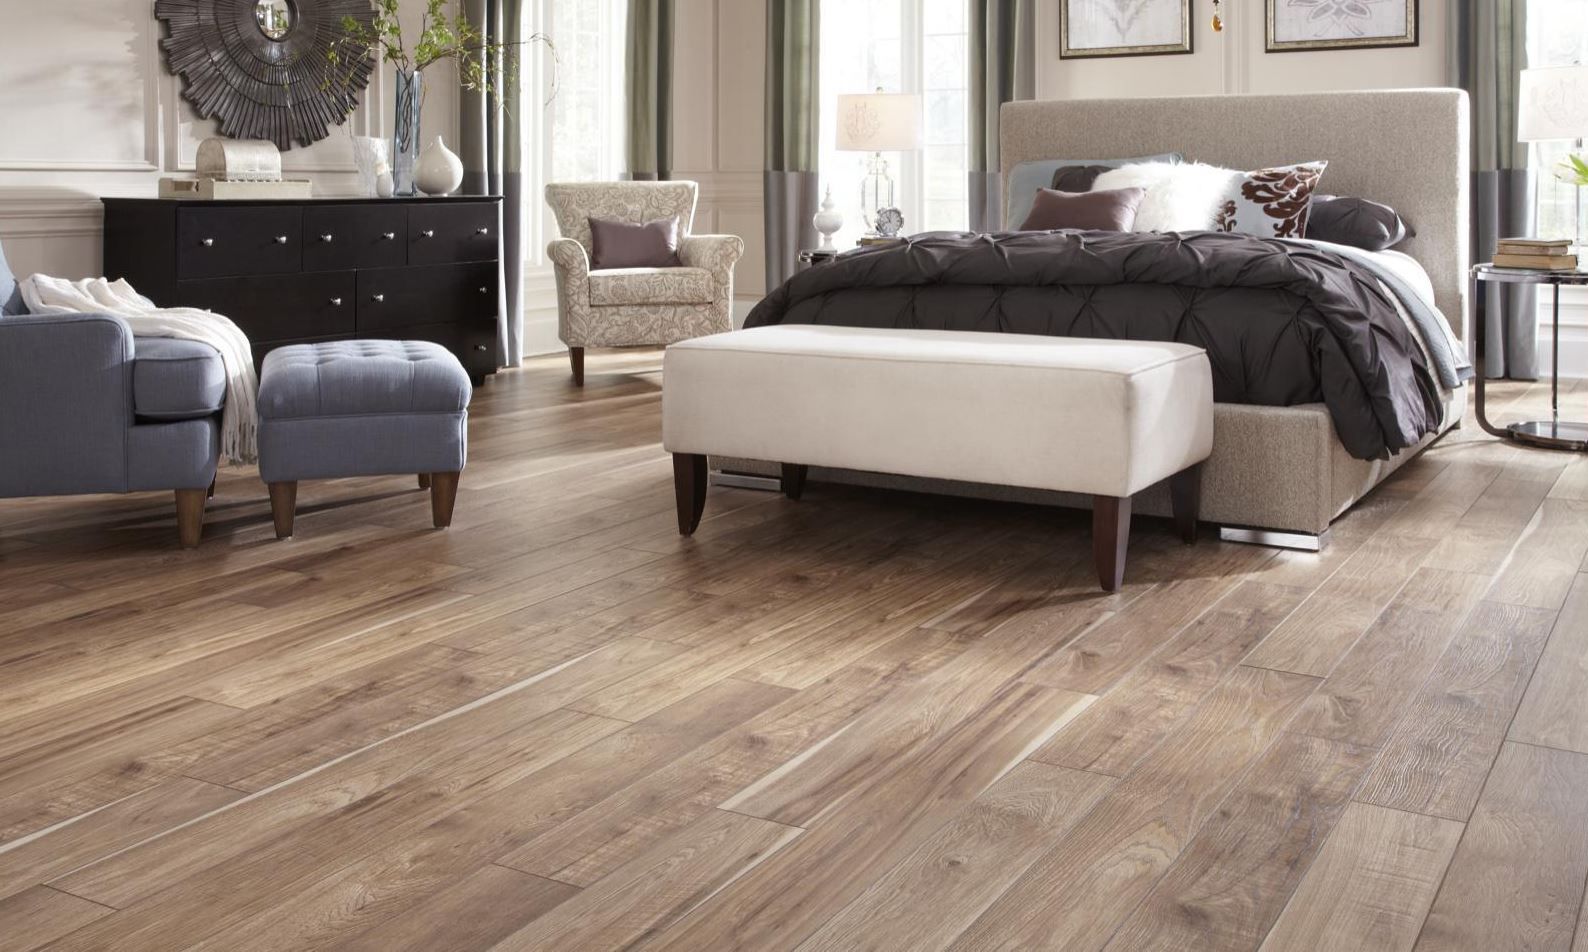 Luxury vinyl plank flooring in the bedroom